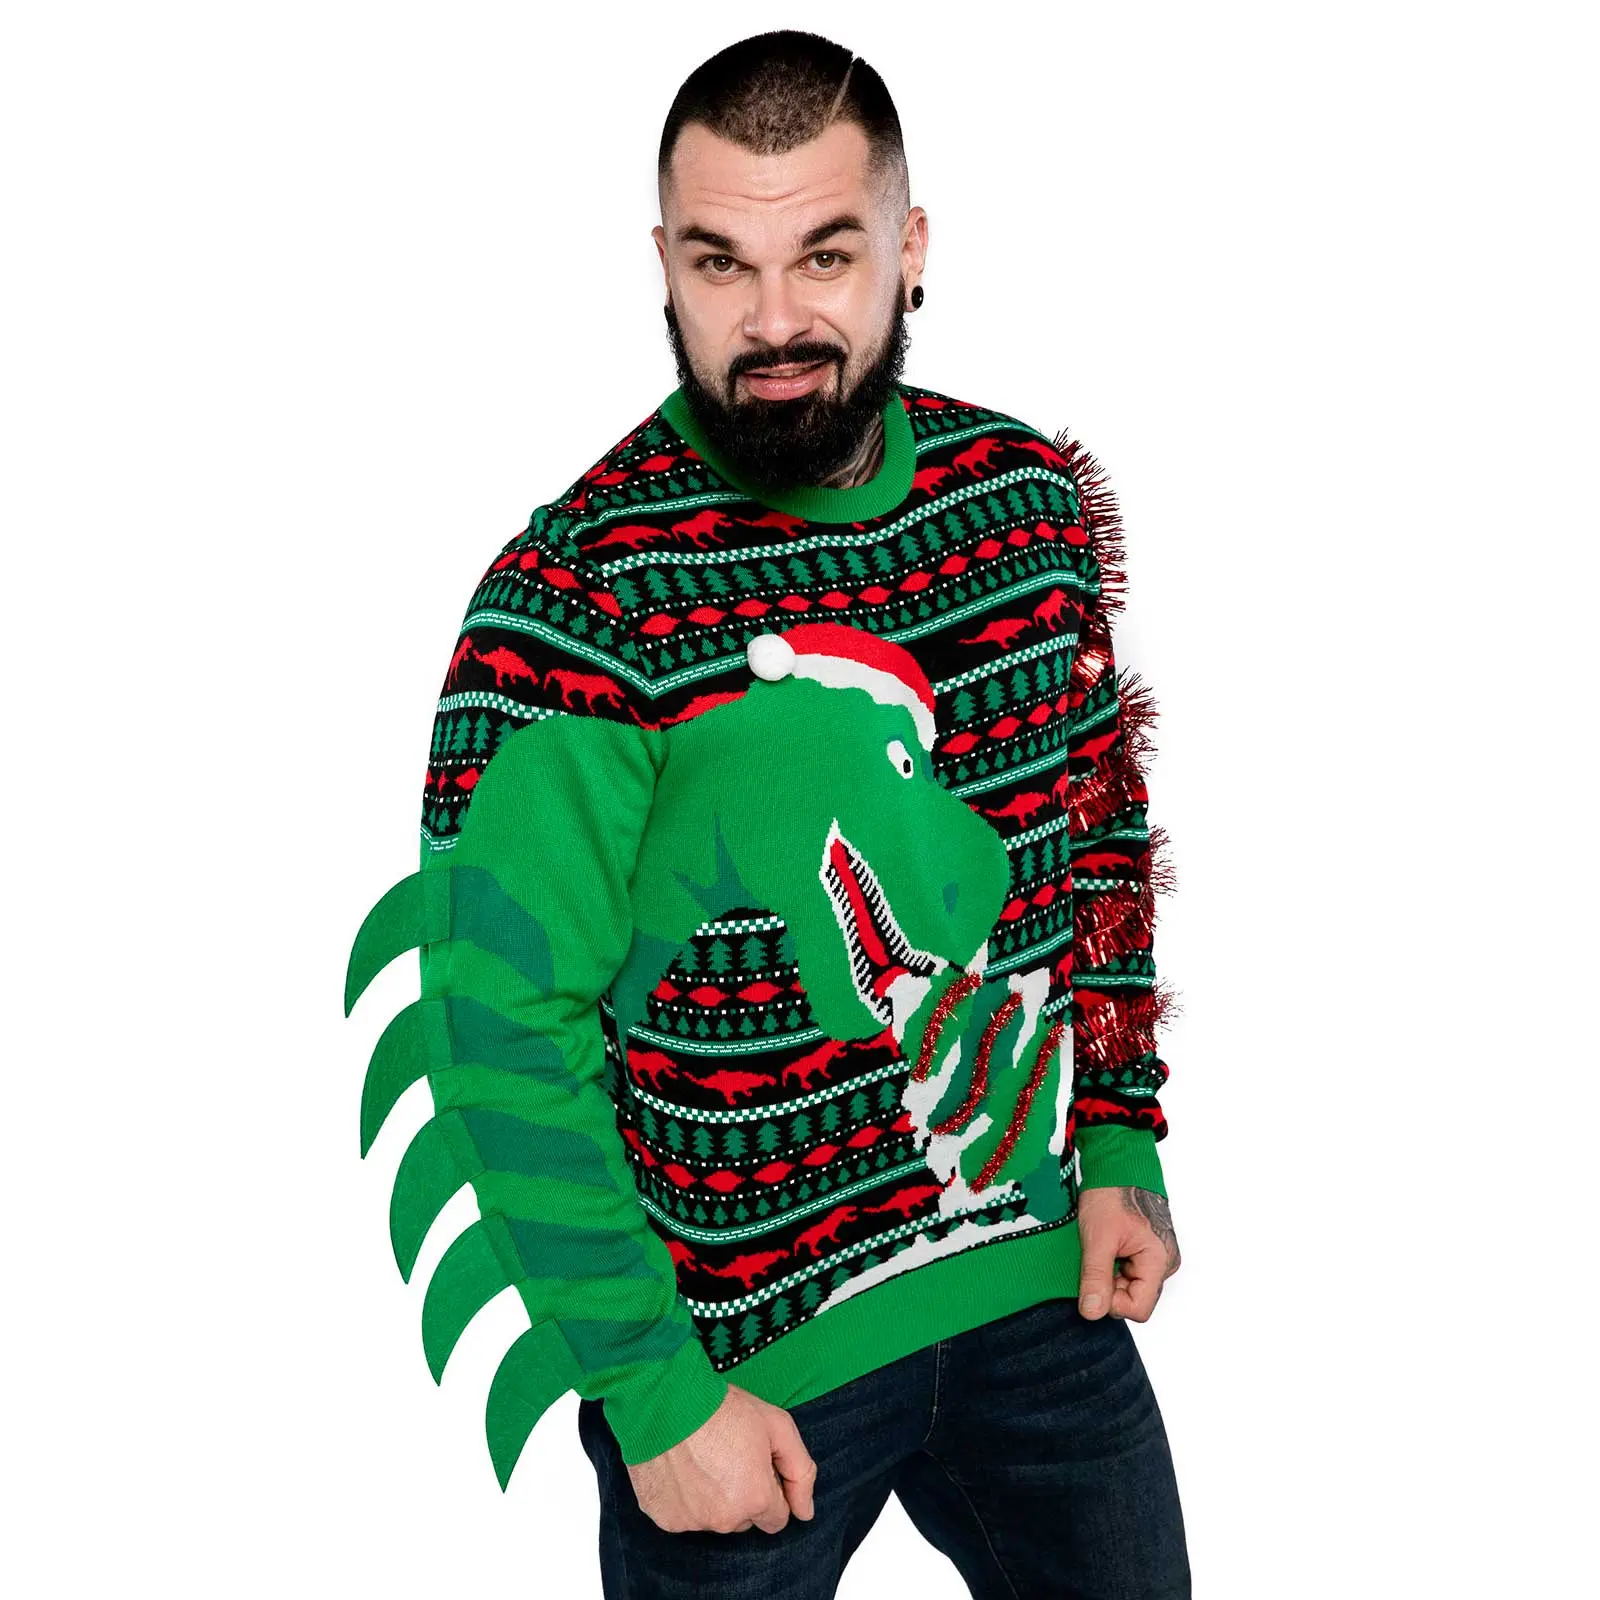 Tree-Rex Wrecker Unisex Funny Christmas Sweater